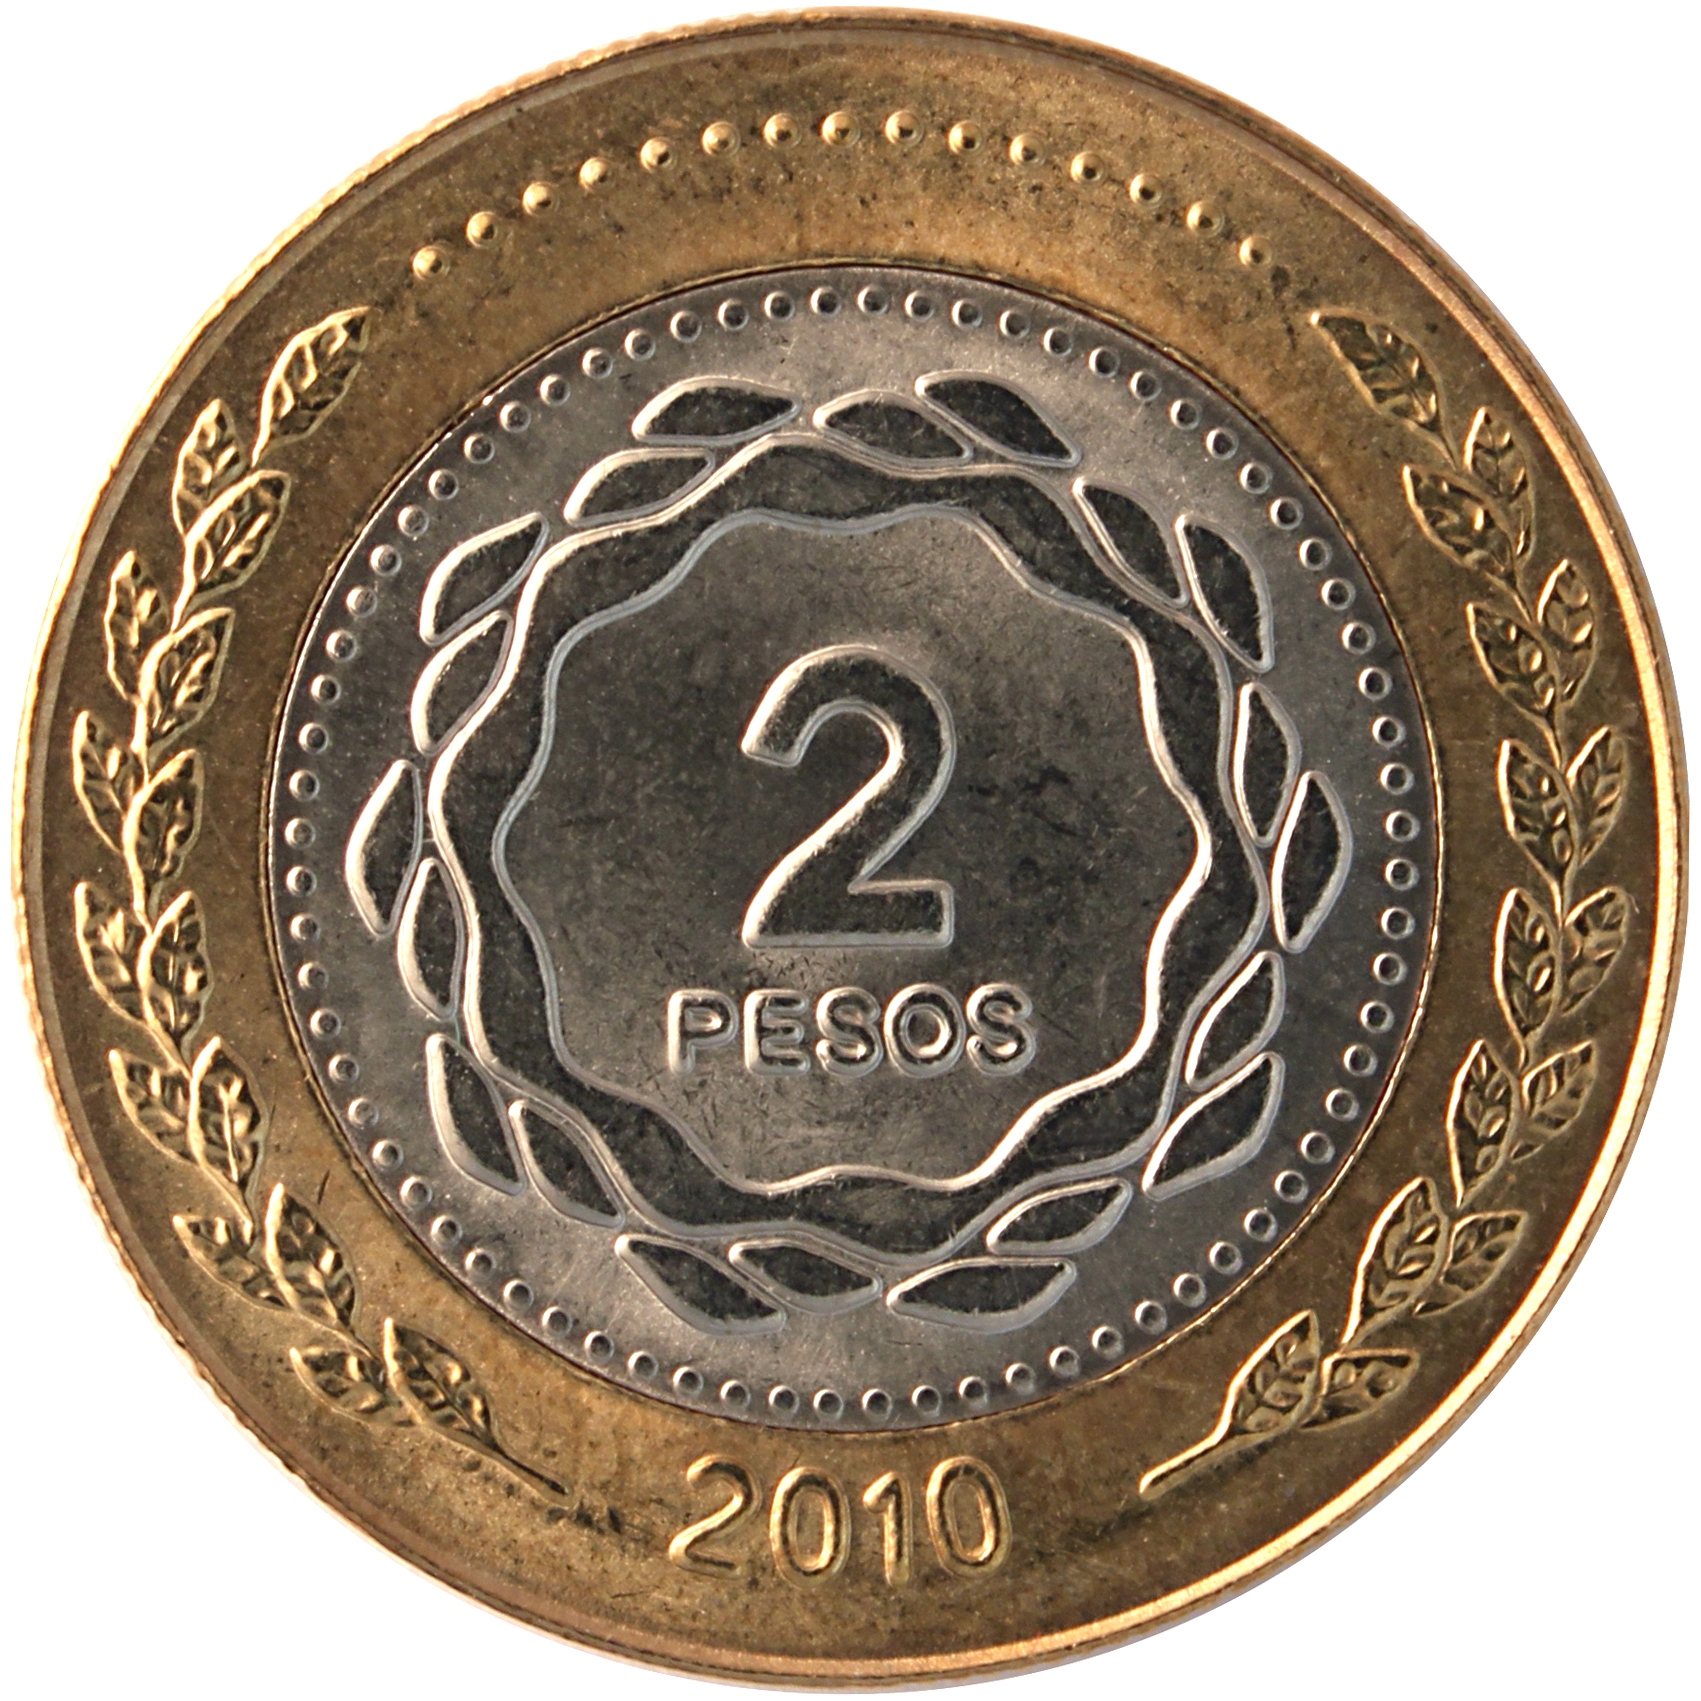 Resultado de imagen para moneda dos pesos